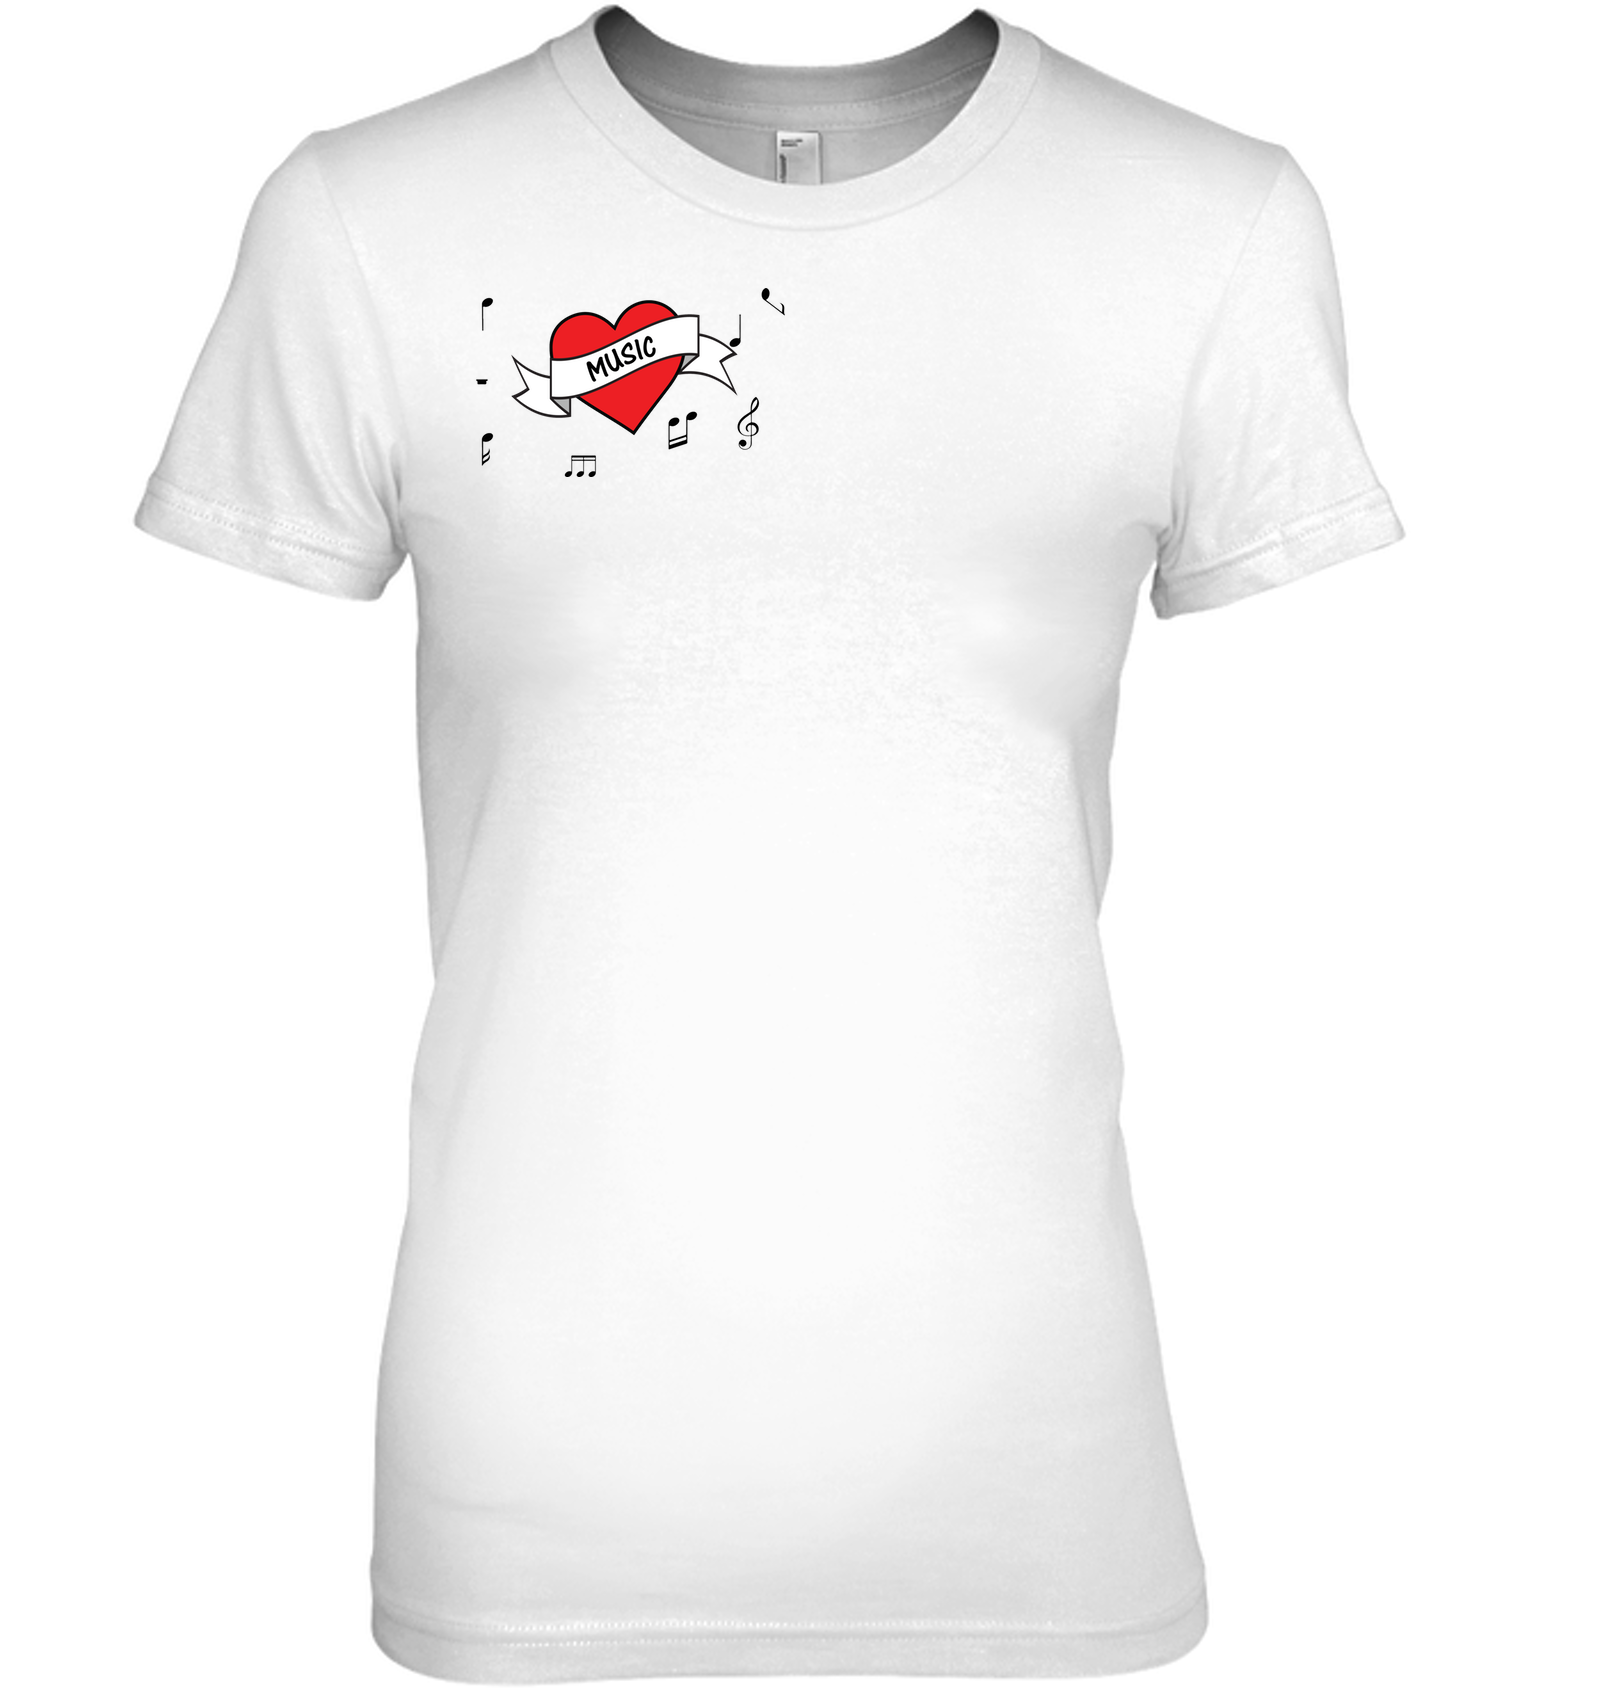 Musical Heart (Pocket Size) - Hanes Women's Nano-T® T-shirt